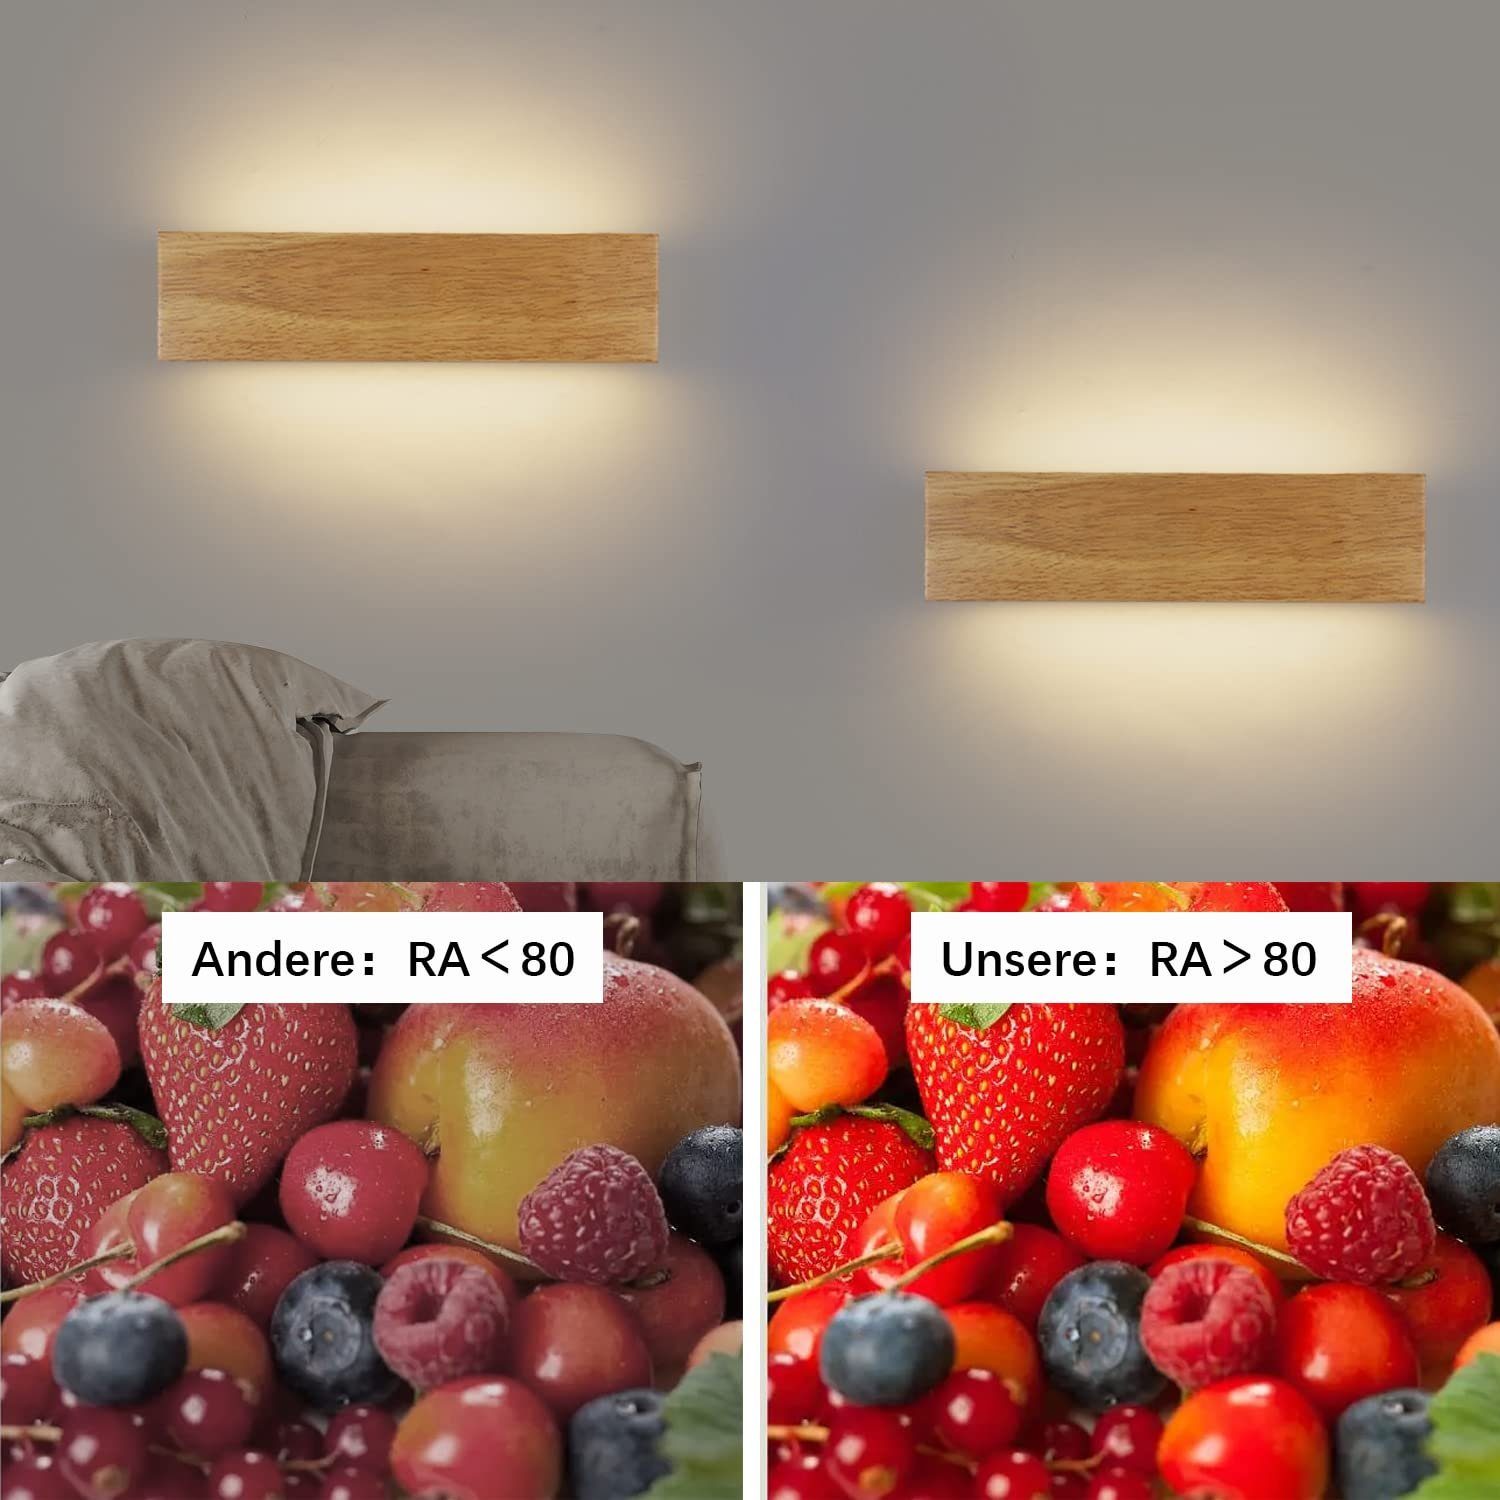 Nettlife LED Innenwandleuchte Warmweiß, Drehfunktion Wandleuchte Holz aus